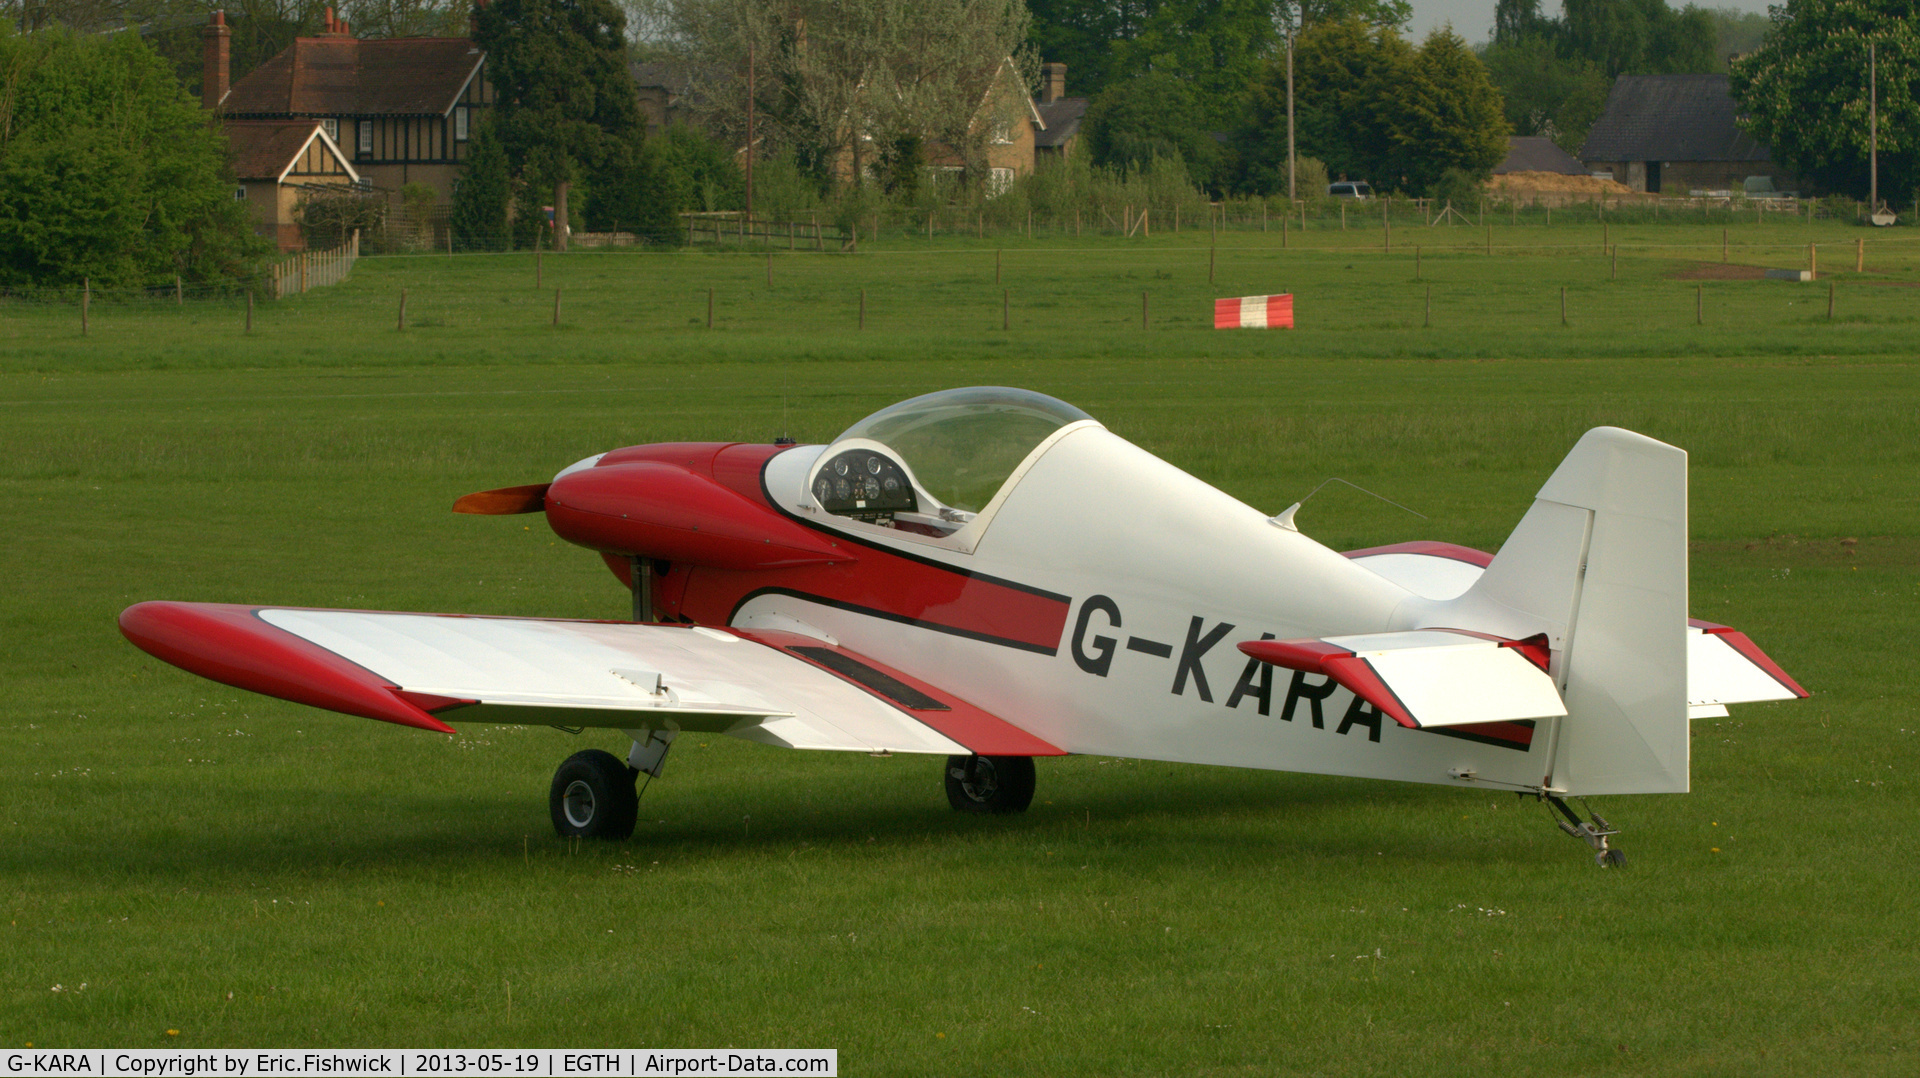 G-KARA, 1986 Brugger MB-2 Colibri C/N PFA 043-10980, 1. G-KARA at Shuttleworth Flying Day and LAA Party in the Park, May 2013.